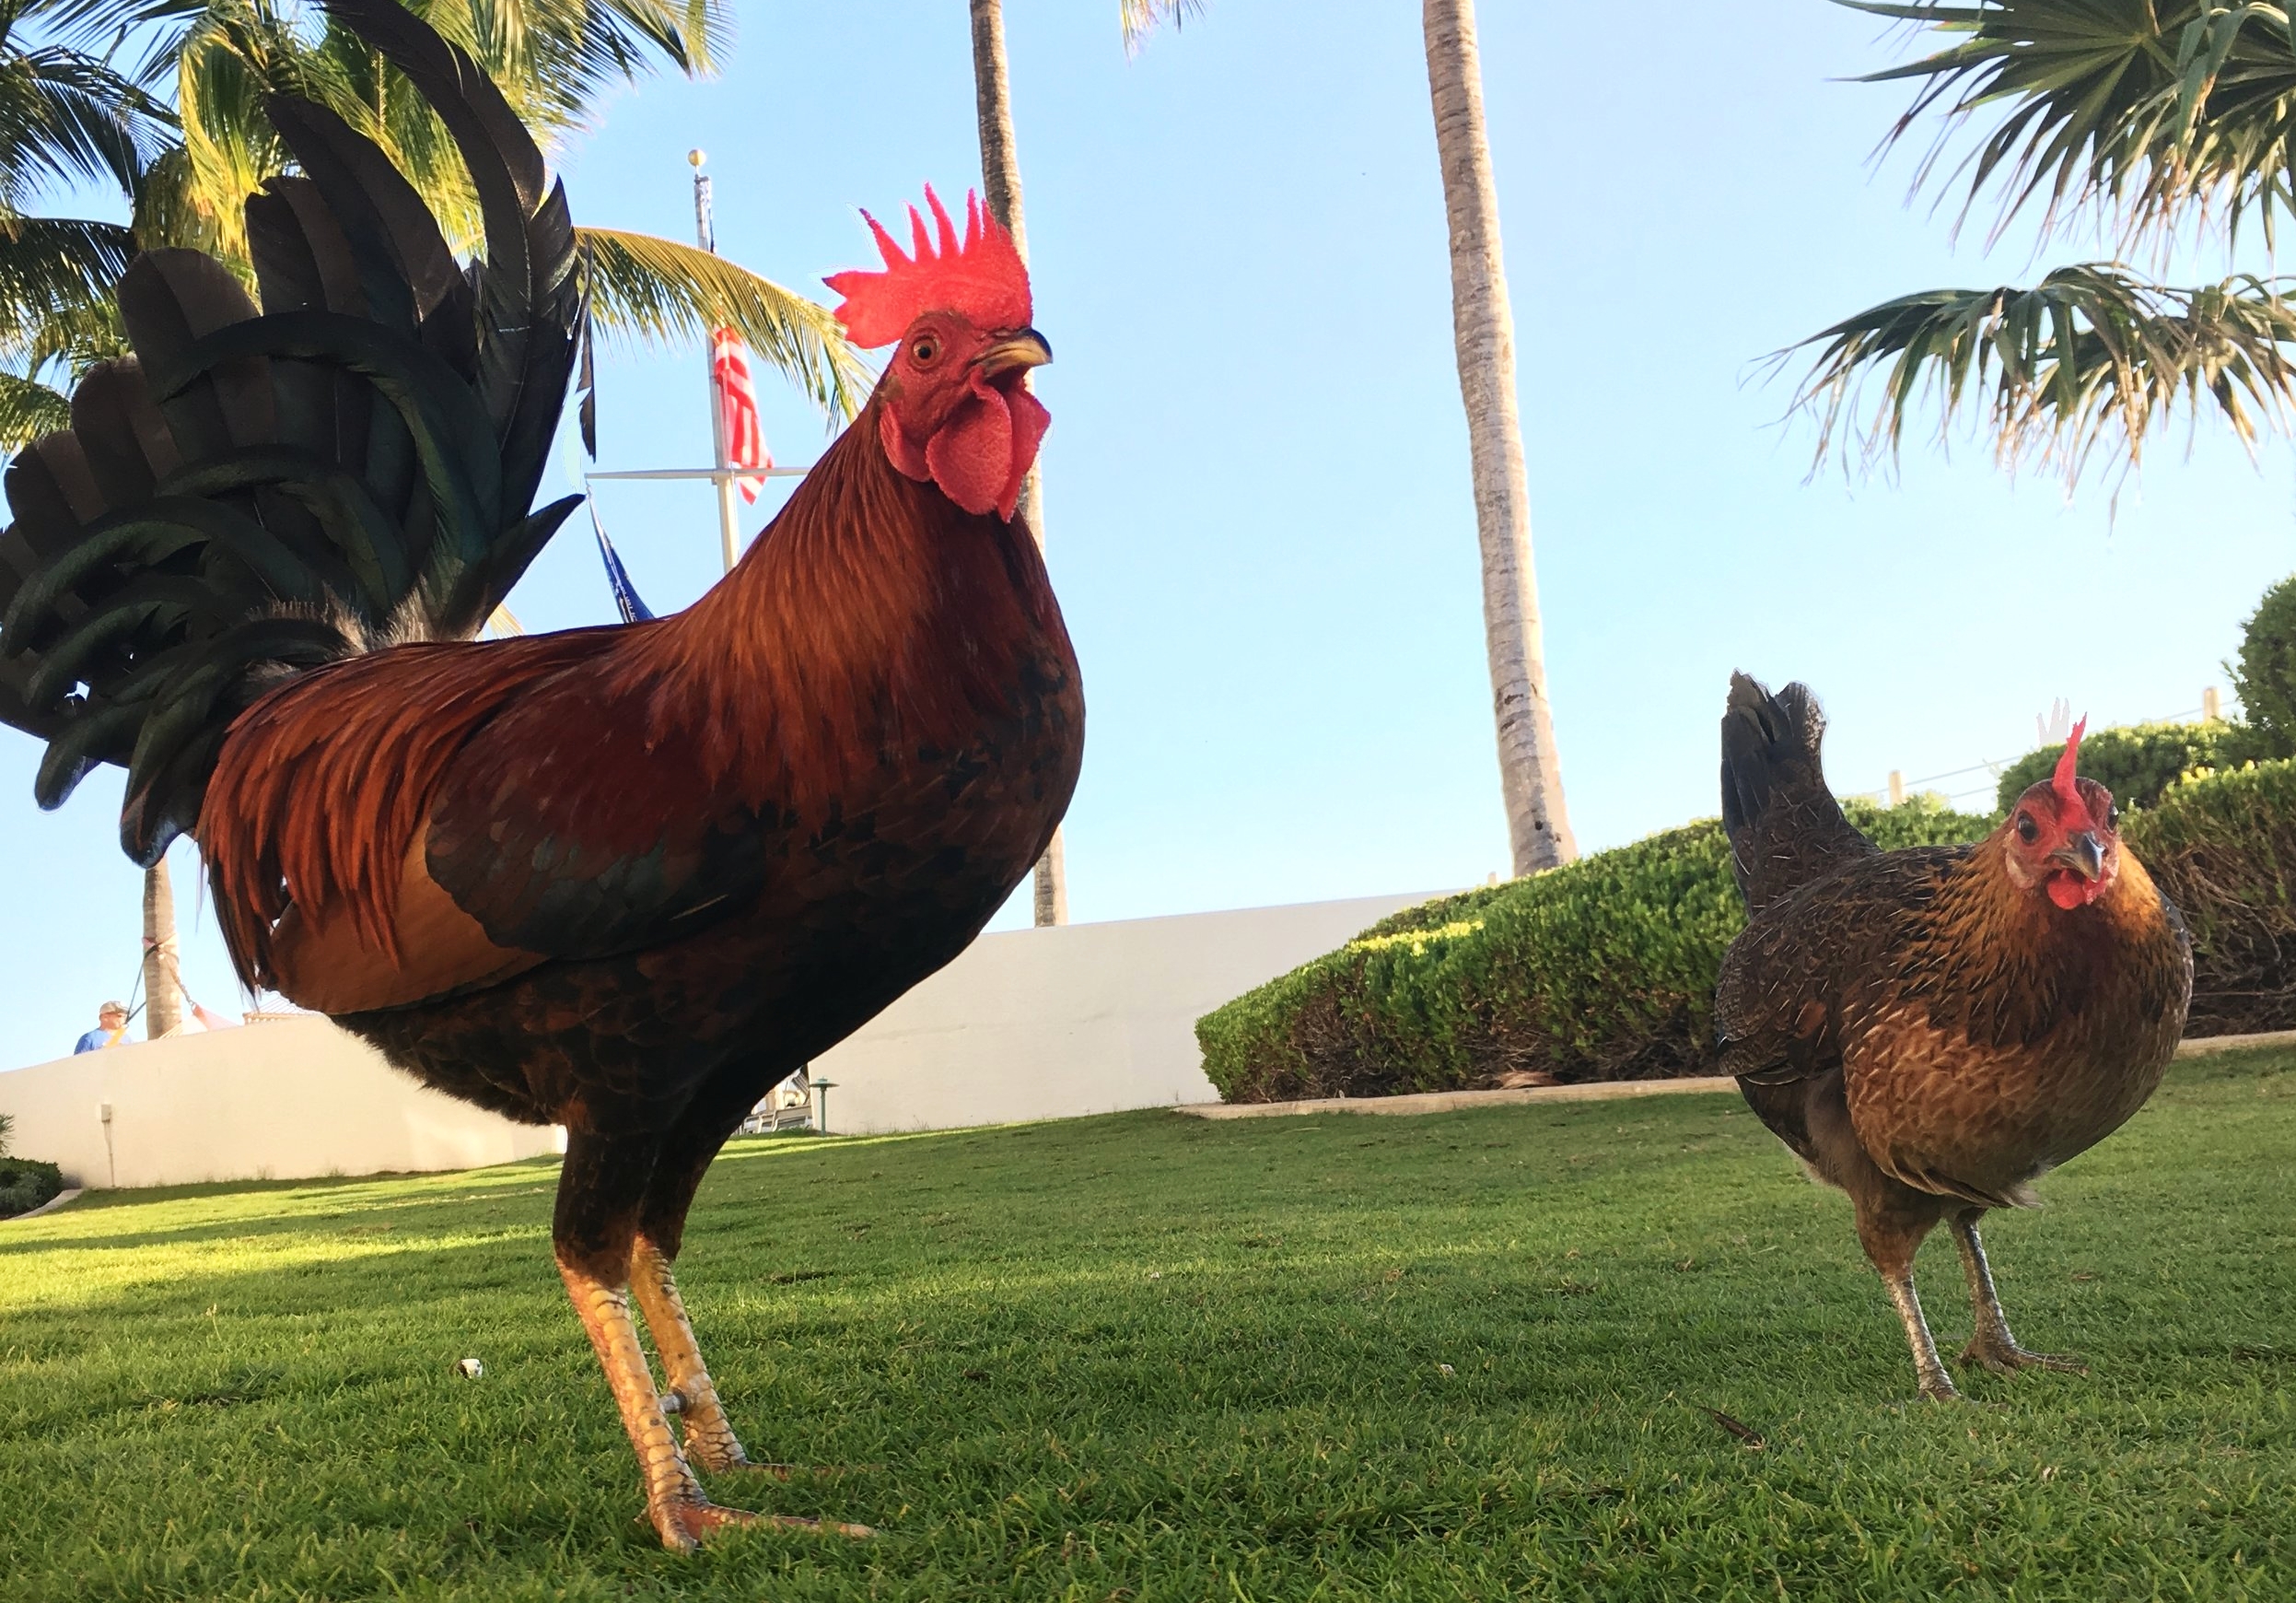 Key West Chickens photo